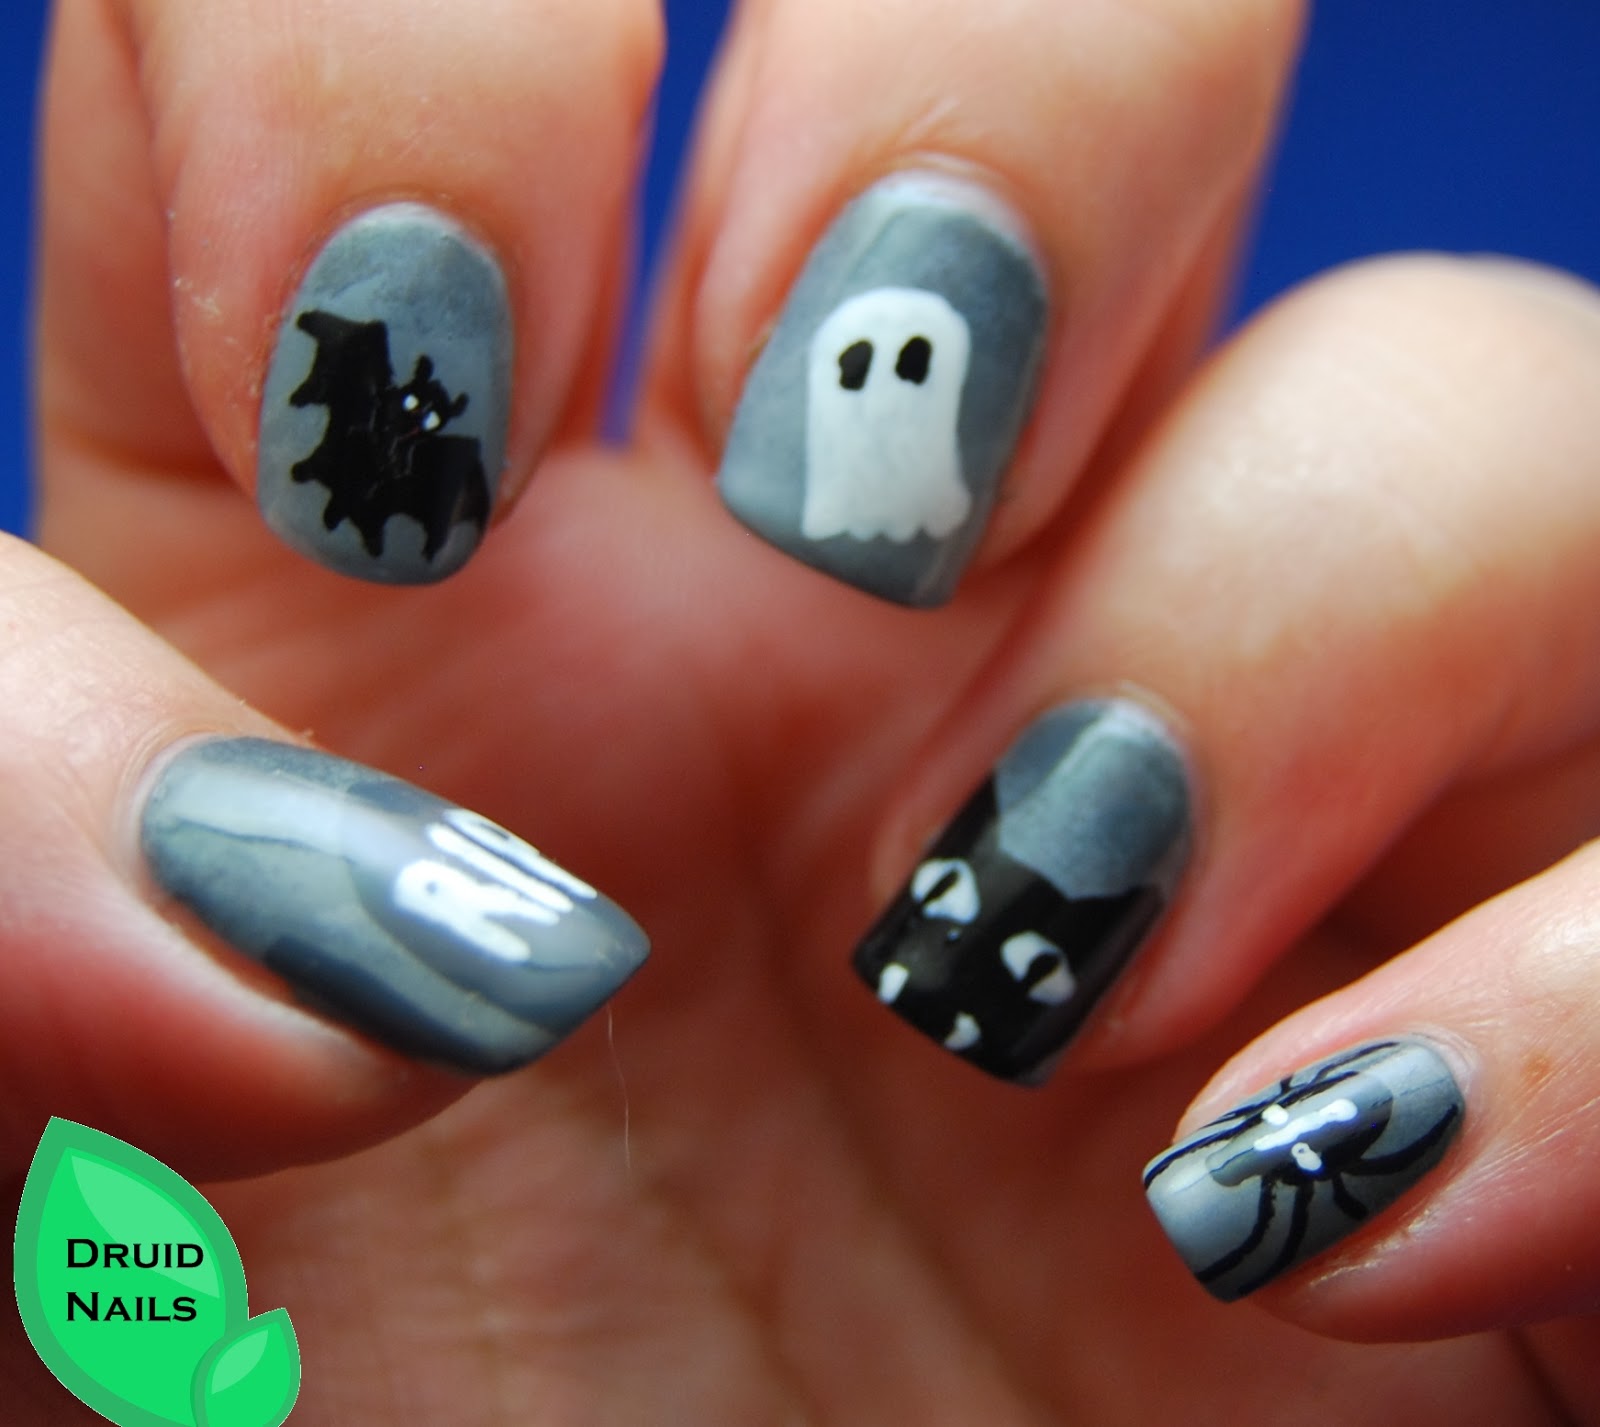 Druid Nails: Monochrome Halloween